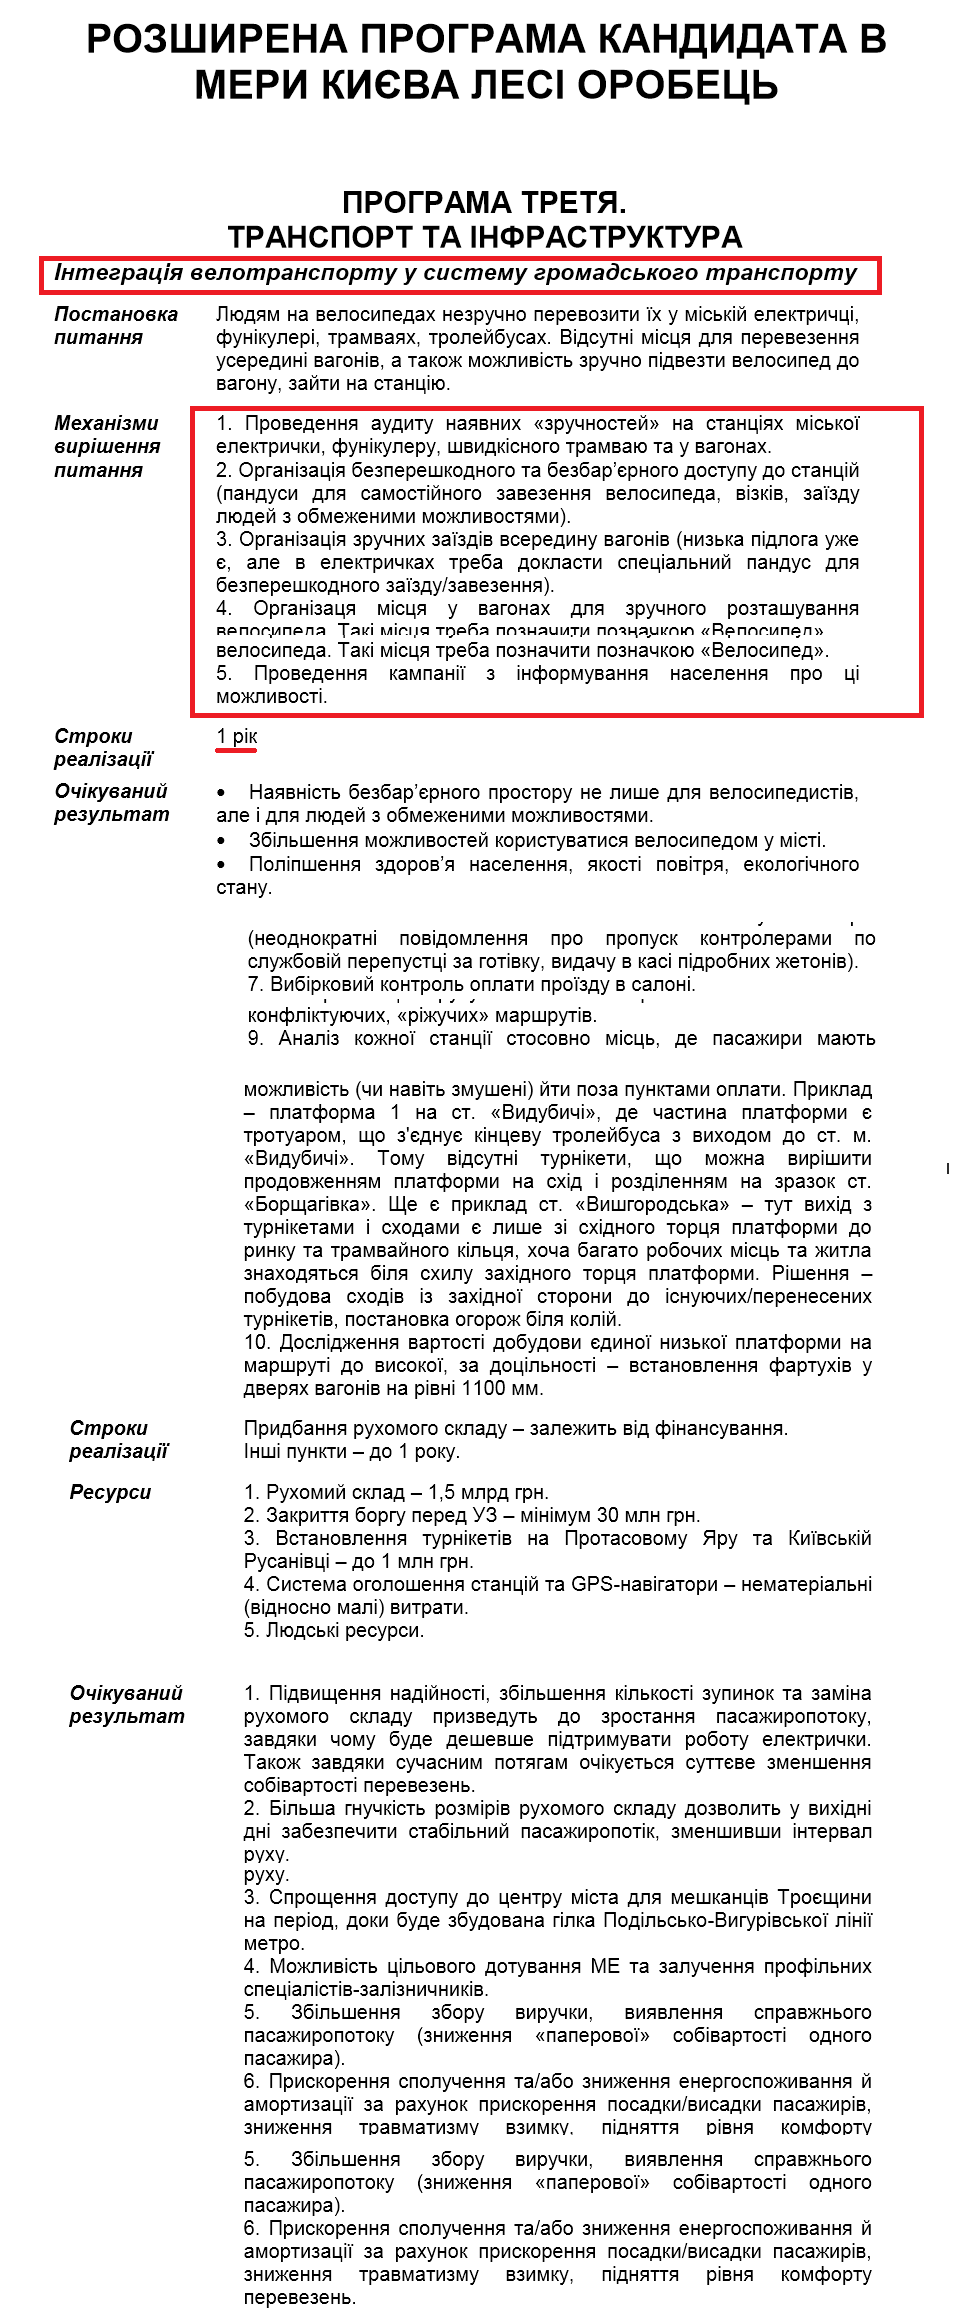 http://lesyaorobets.com.ua/uploads/Lesya-Orobets-program.pdf